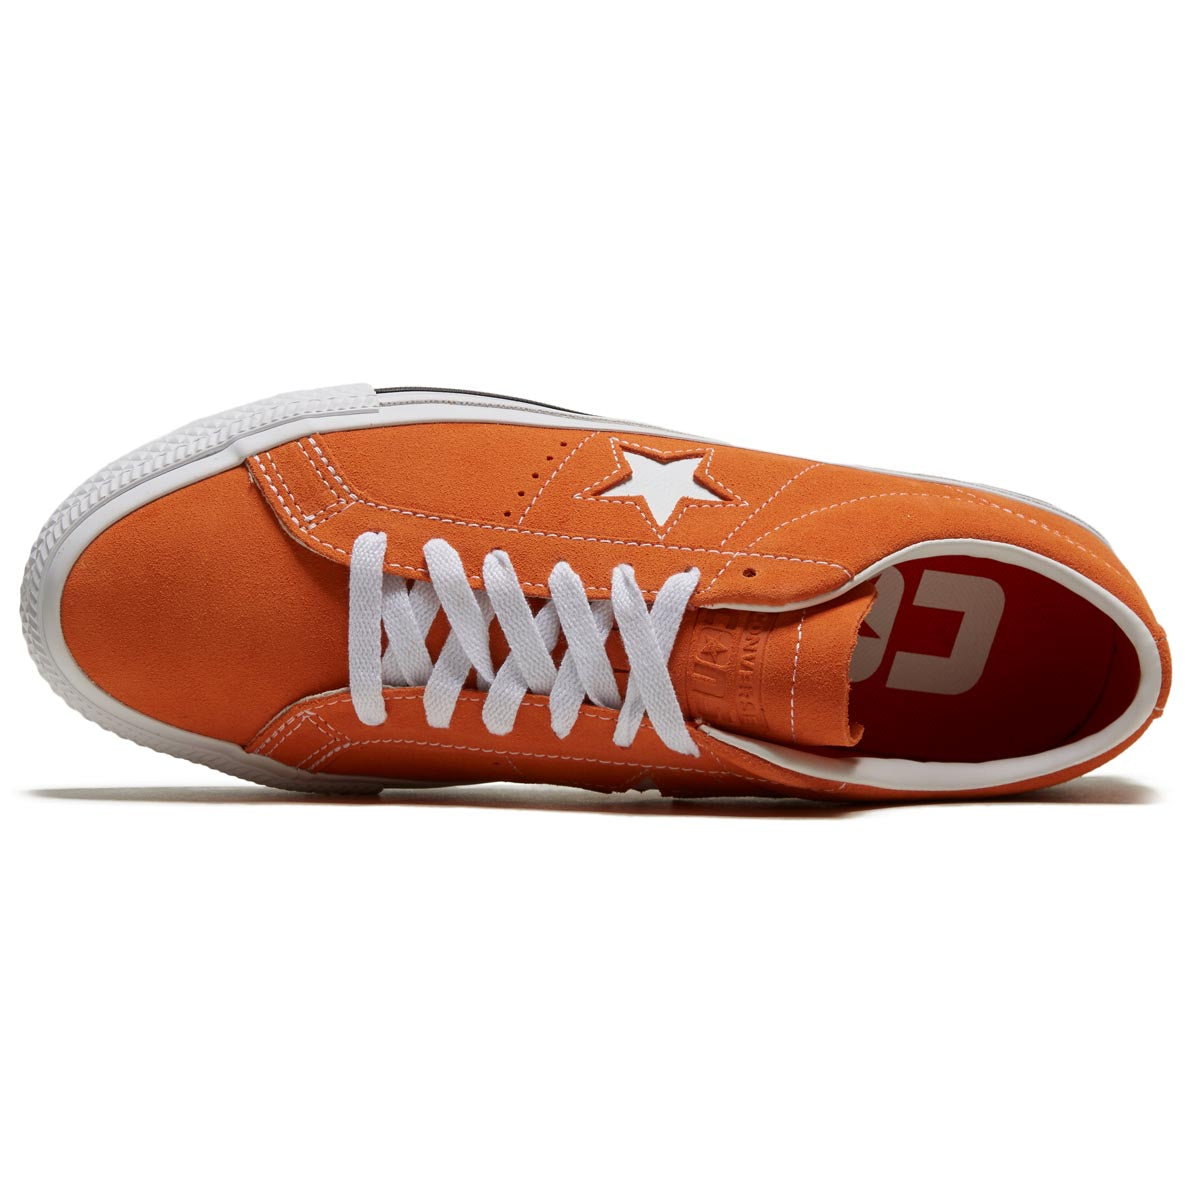 Converse One Star Pro Ox Shoes - Orange/White/Black image 3